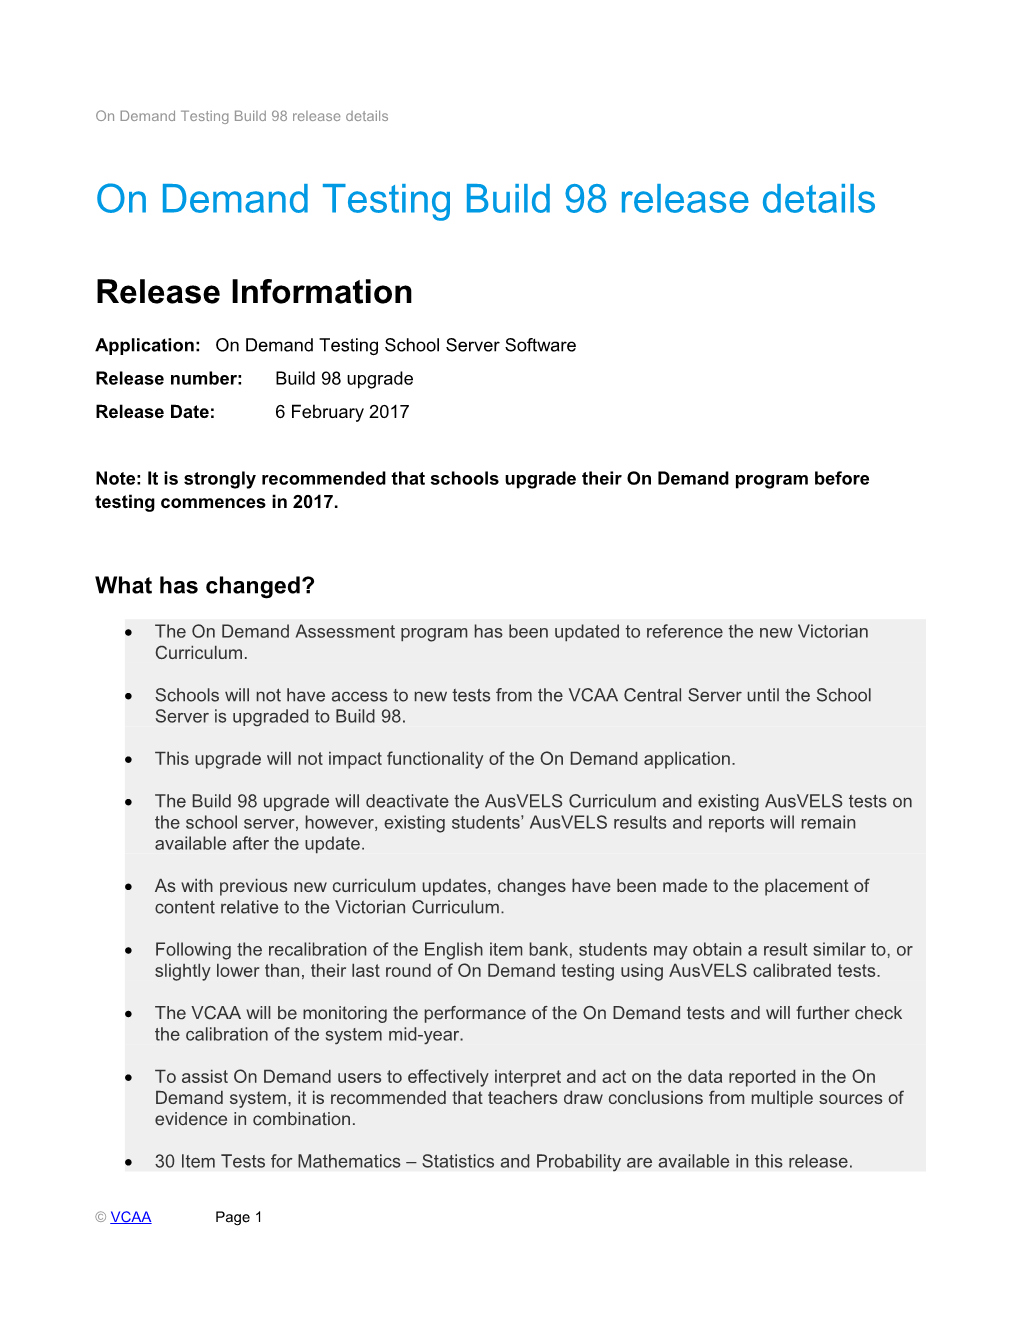 On Demand Testing Build 98 Release Details